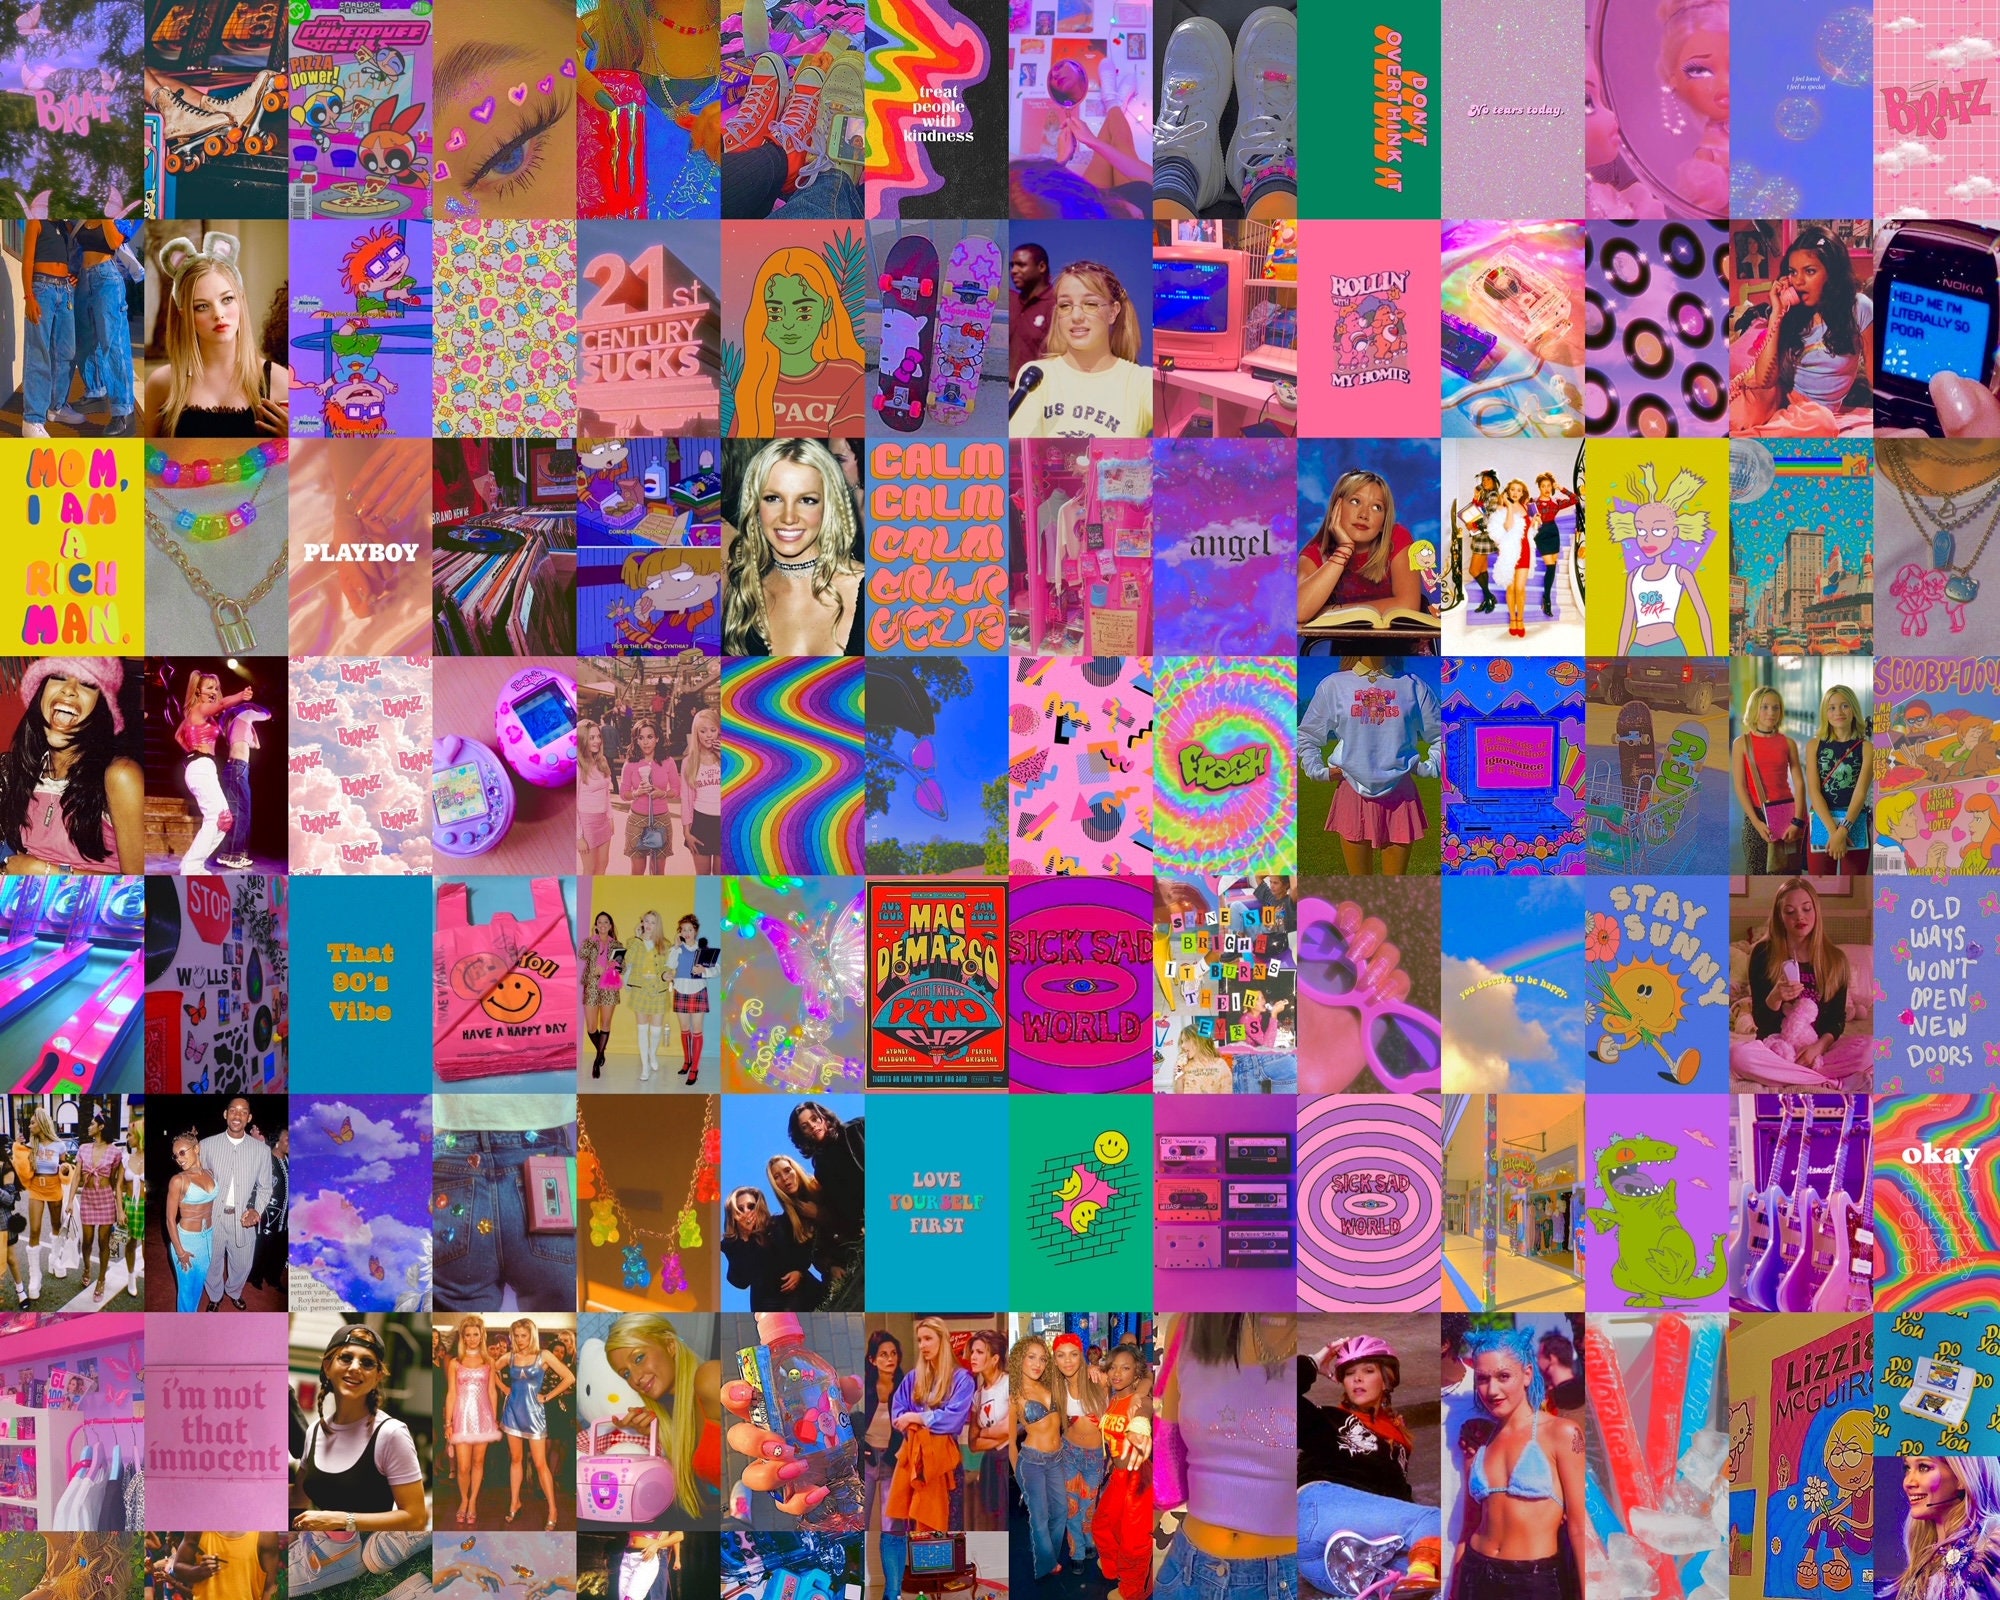 Pink Y2K Wall Collage Kit, (DIGITAL DOWNLOADS), 46 pcs, 4 x 6, Bougie  Pink Wall Collage Kit, Baddie room decor, y2k room decor